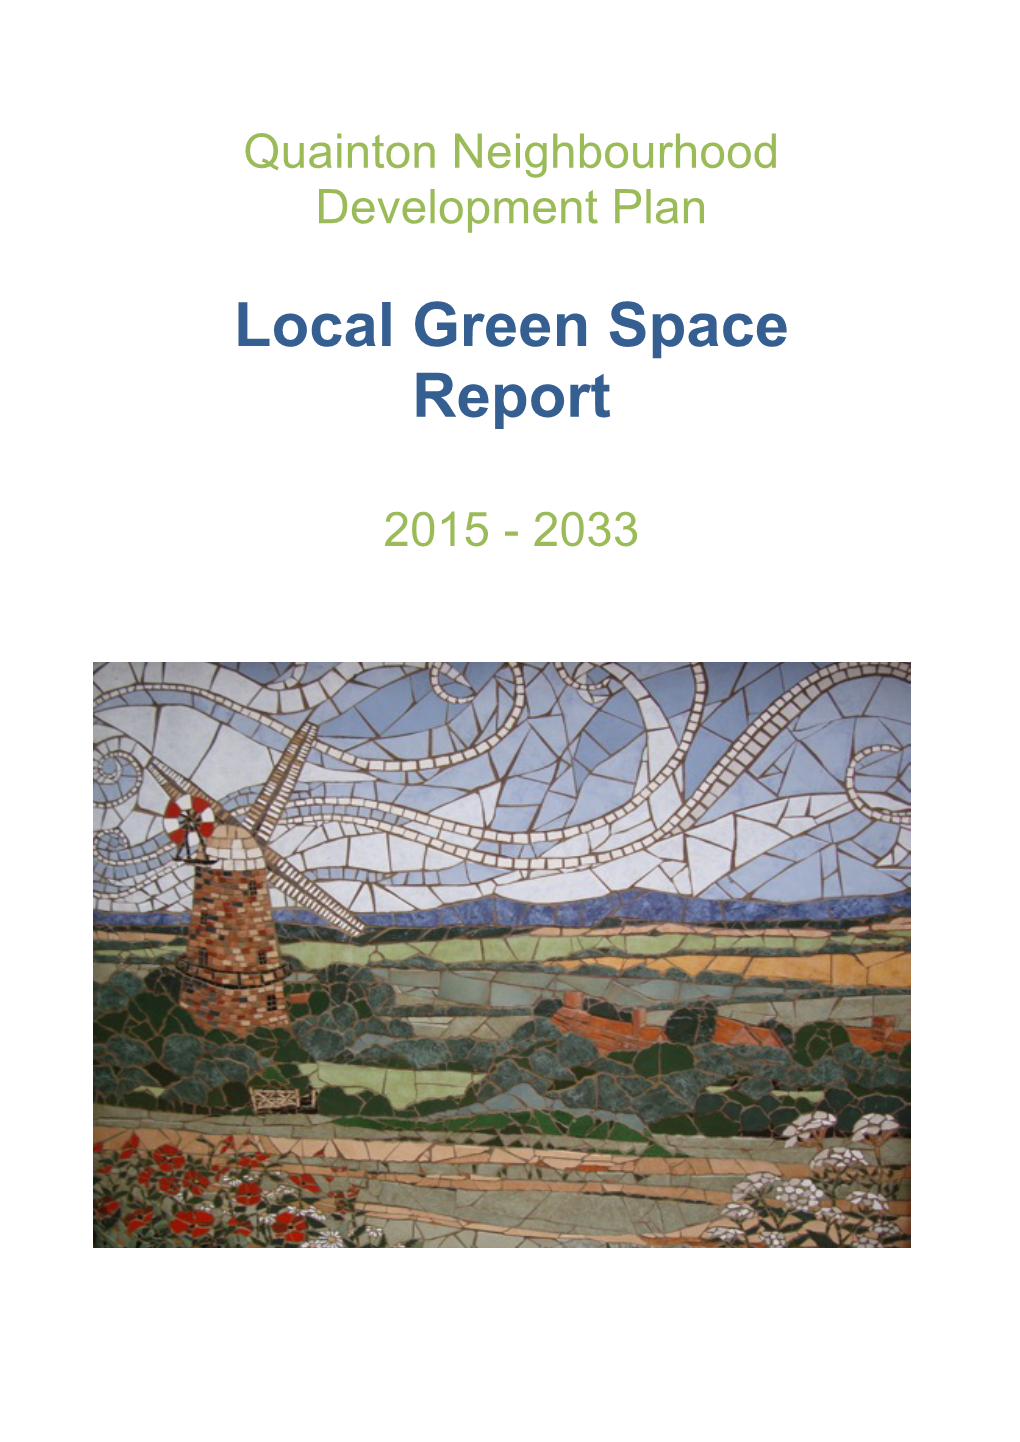 Quainton Neighbourhood Plan Local Green Spaces Report